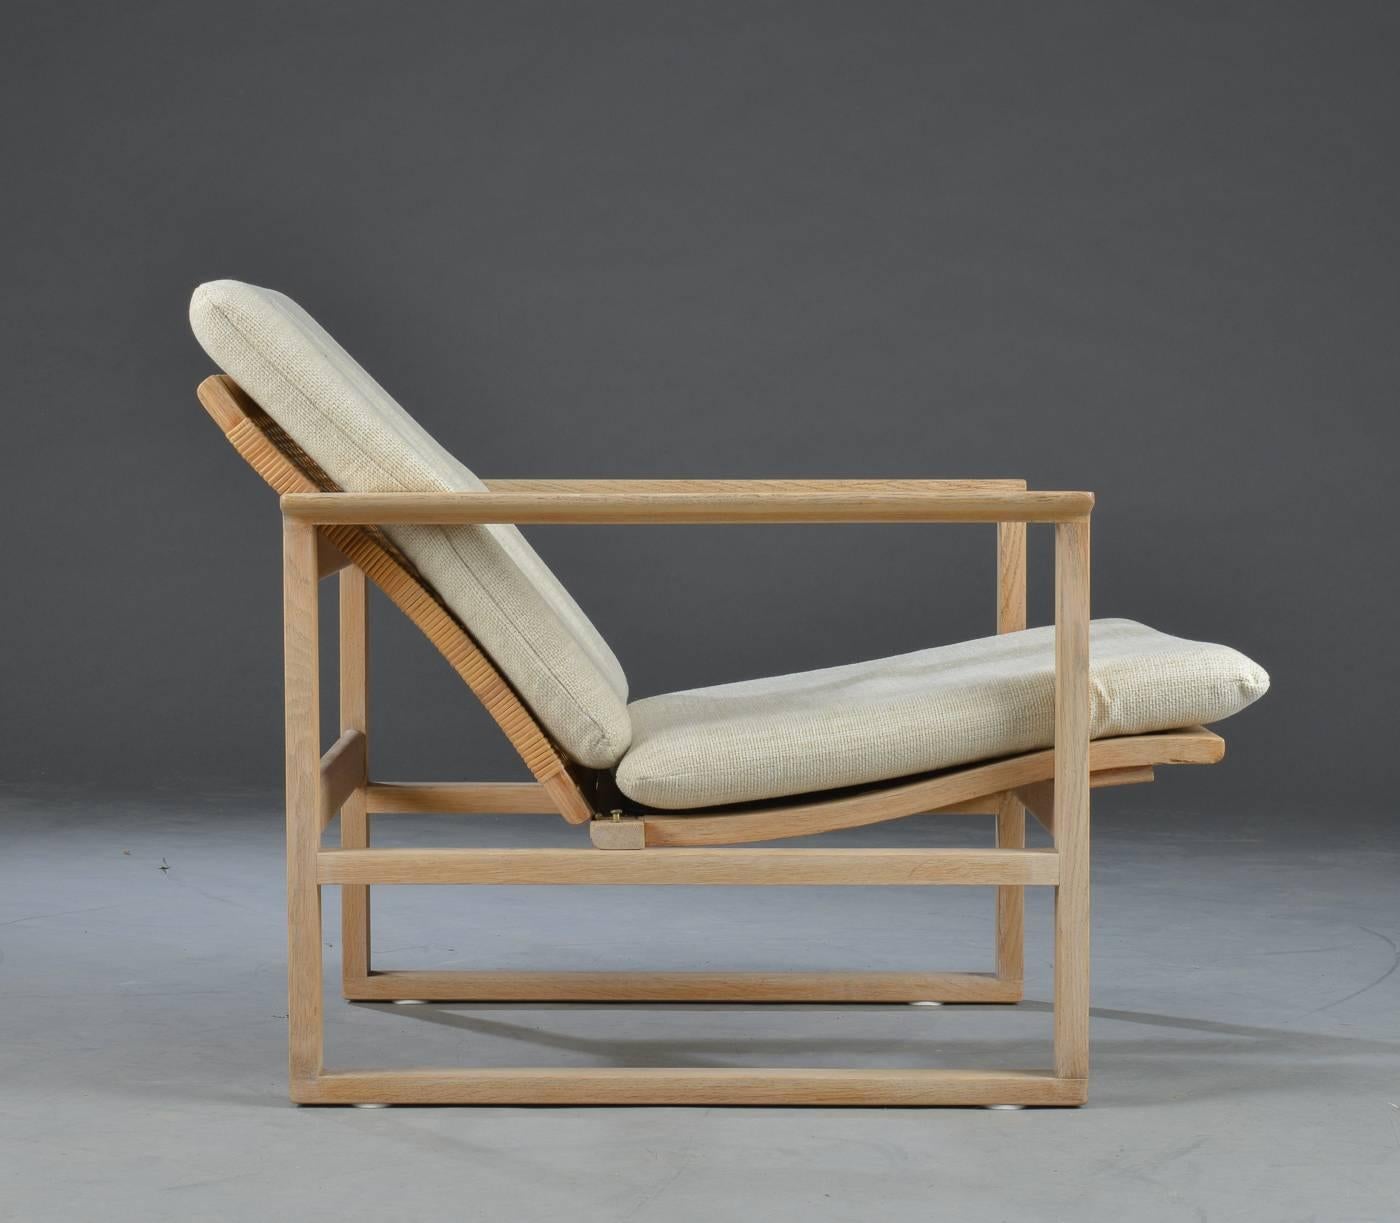 Scandinavian Modern Børge Mogensen Oak Lounge Sled Chair 2256 for Fredericia Furniture Designed 1956